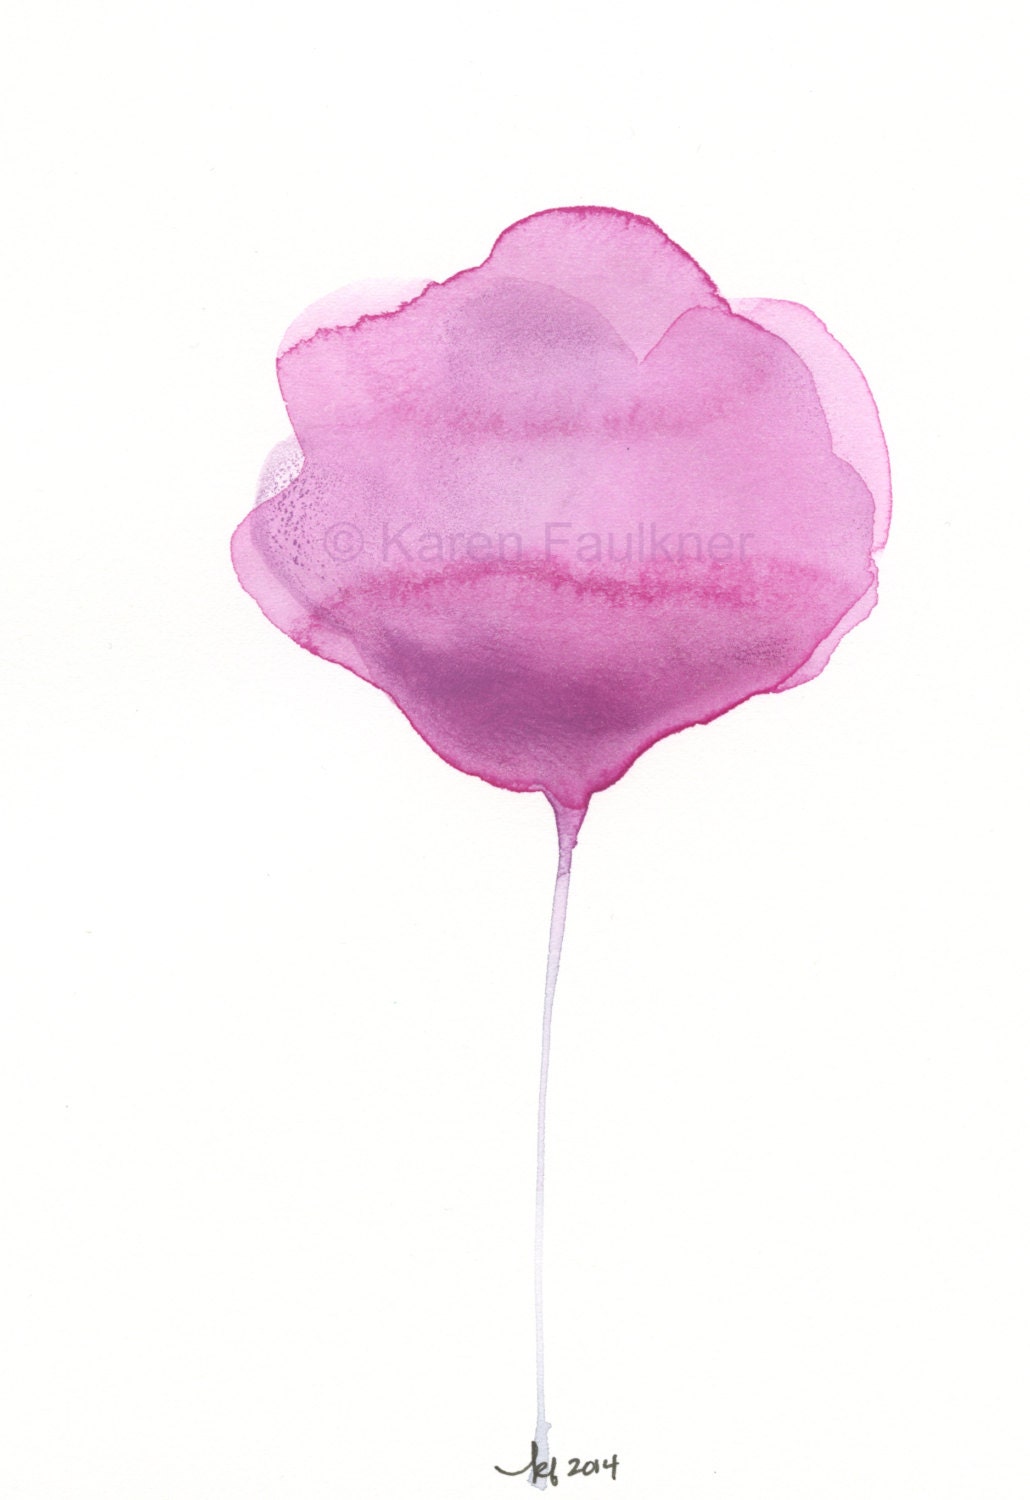 Art, Painting, Watercolor Painting: Bloom in Radiant Orchid - karenfaulknerart